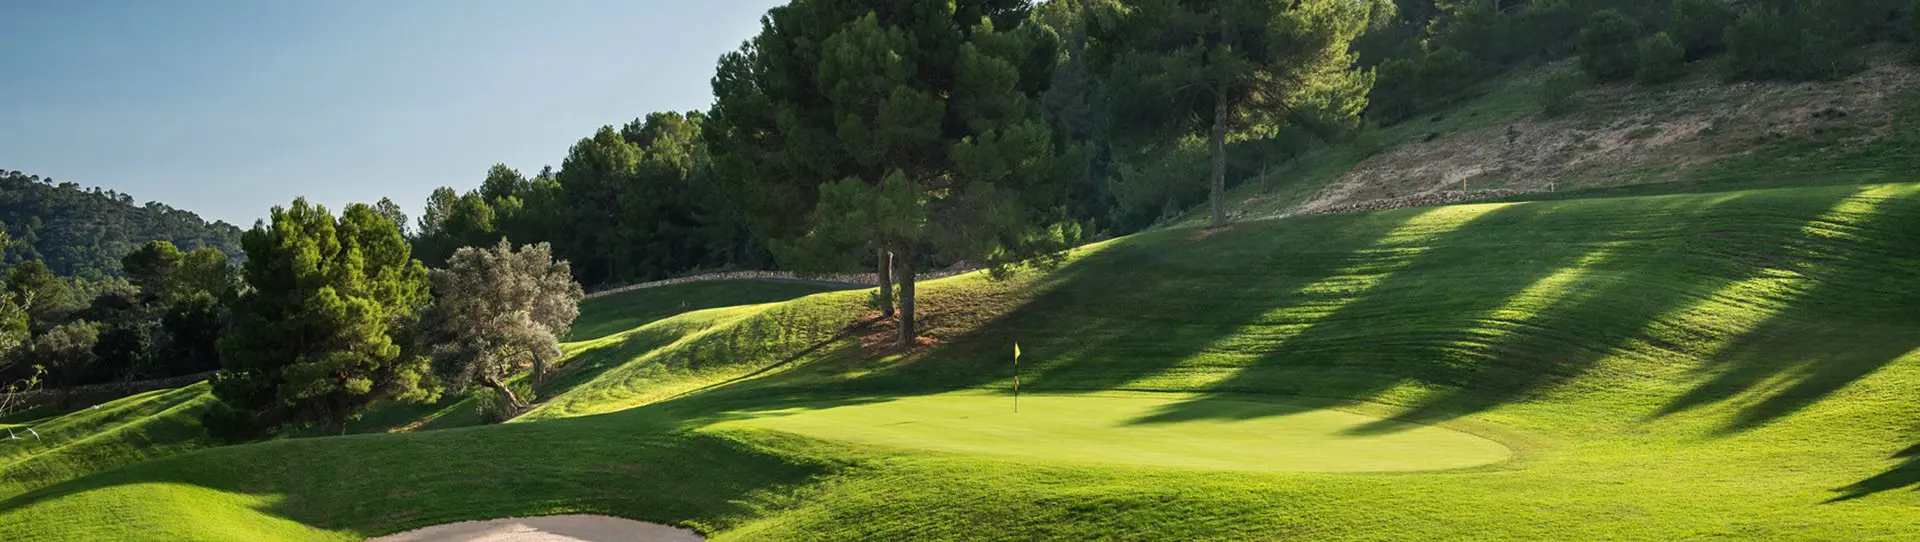 Spain golf courses - Andratx Golf Course - Photo 2